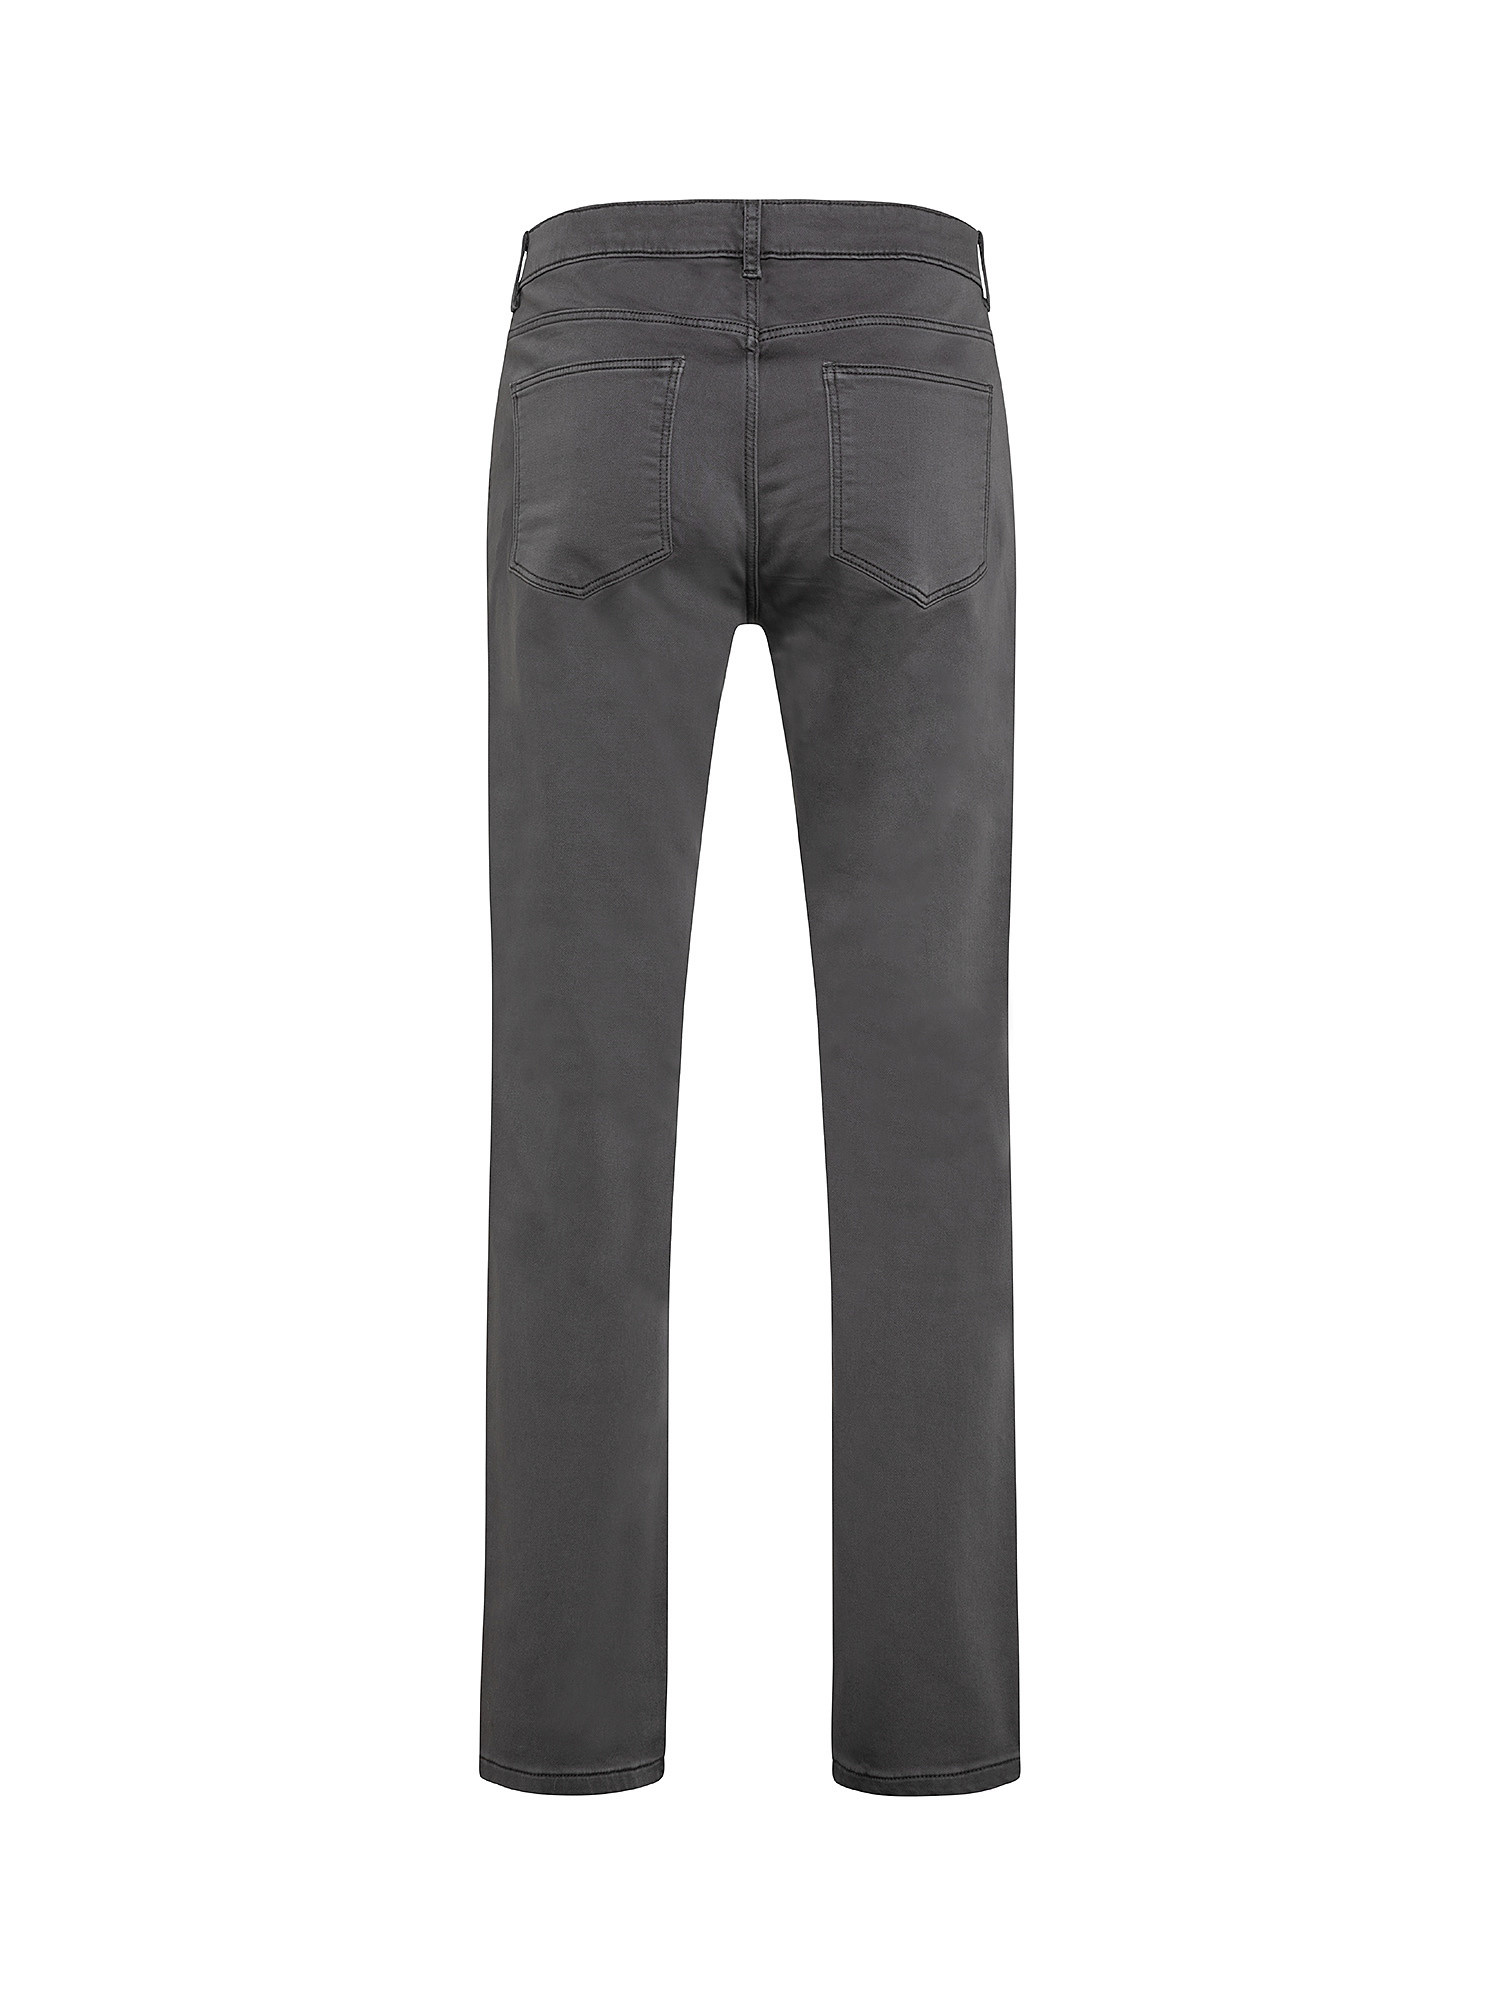 Pantalone 5 tasche slim in felpa, Grigio, large image number 1